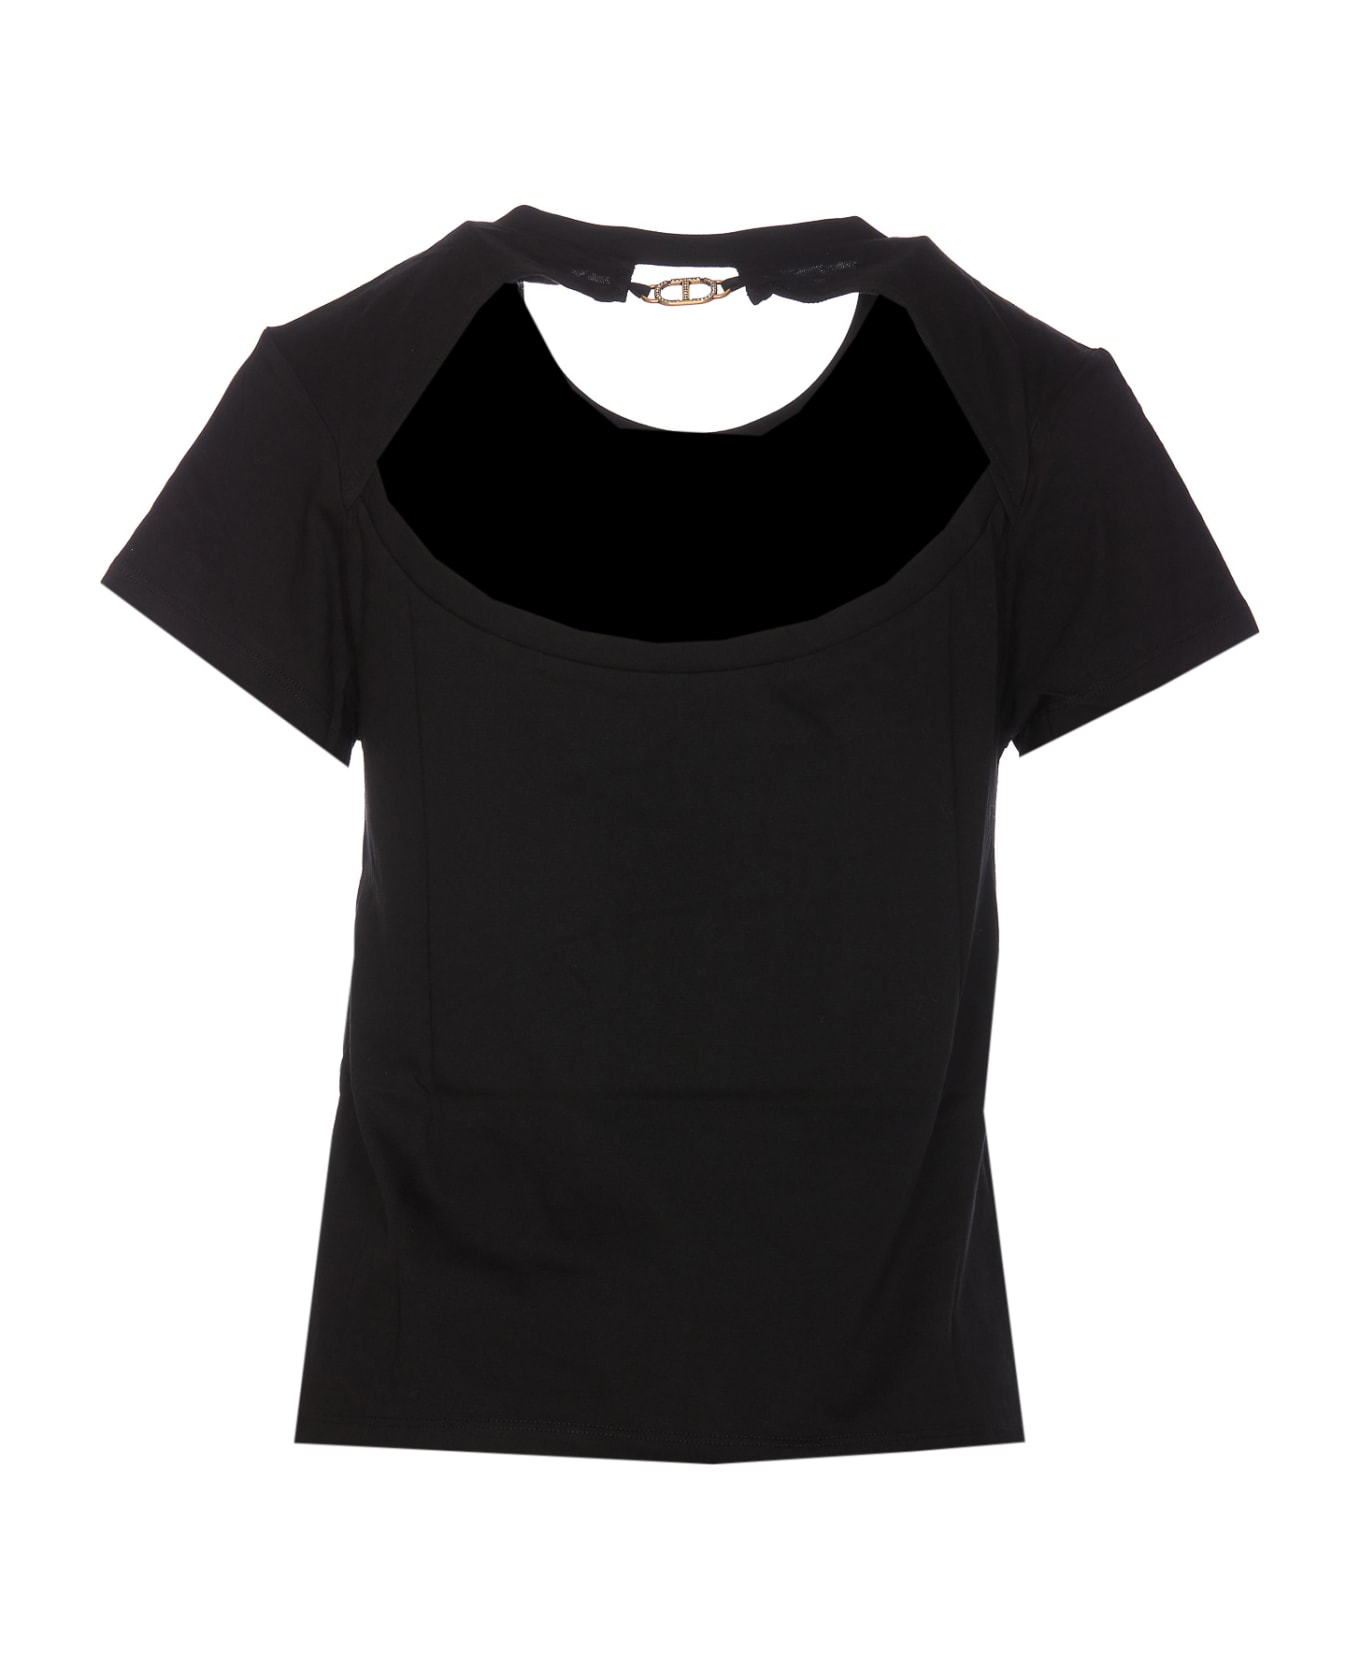 TwinSet T-shirt - Black